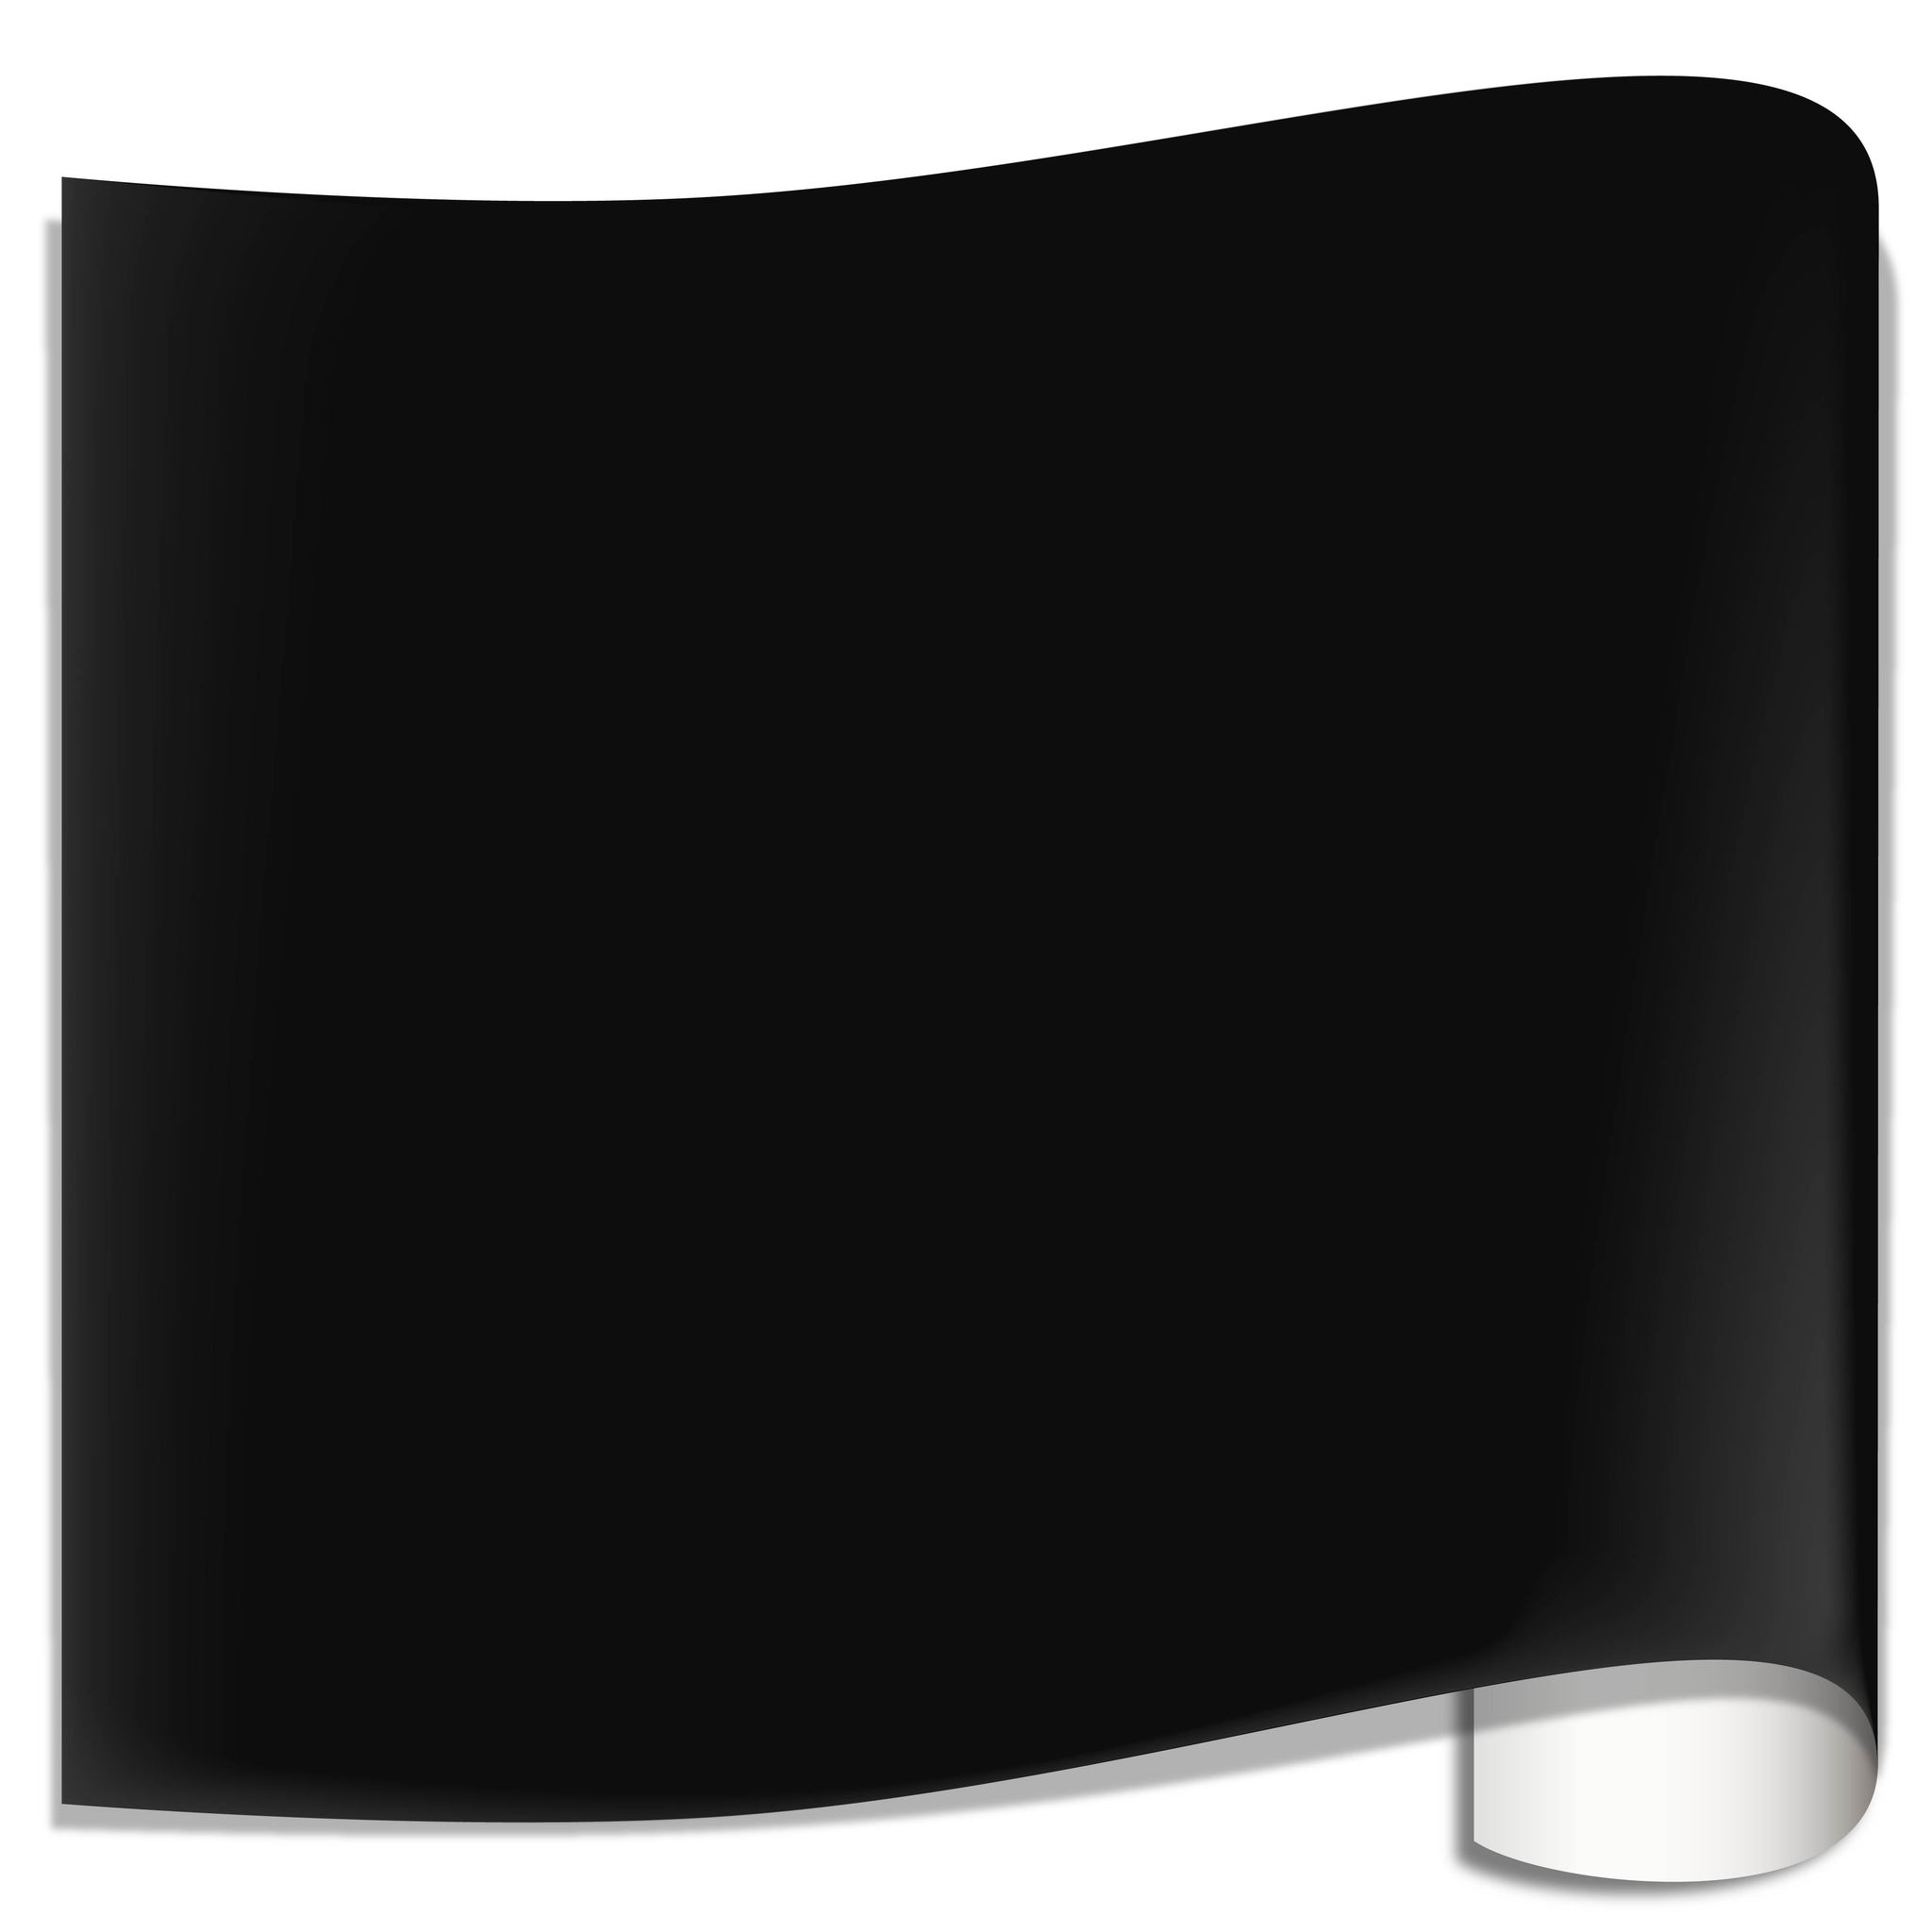 Autocolant Oracal 641 mat negru 070, 5 m x 1 m